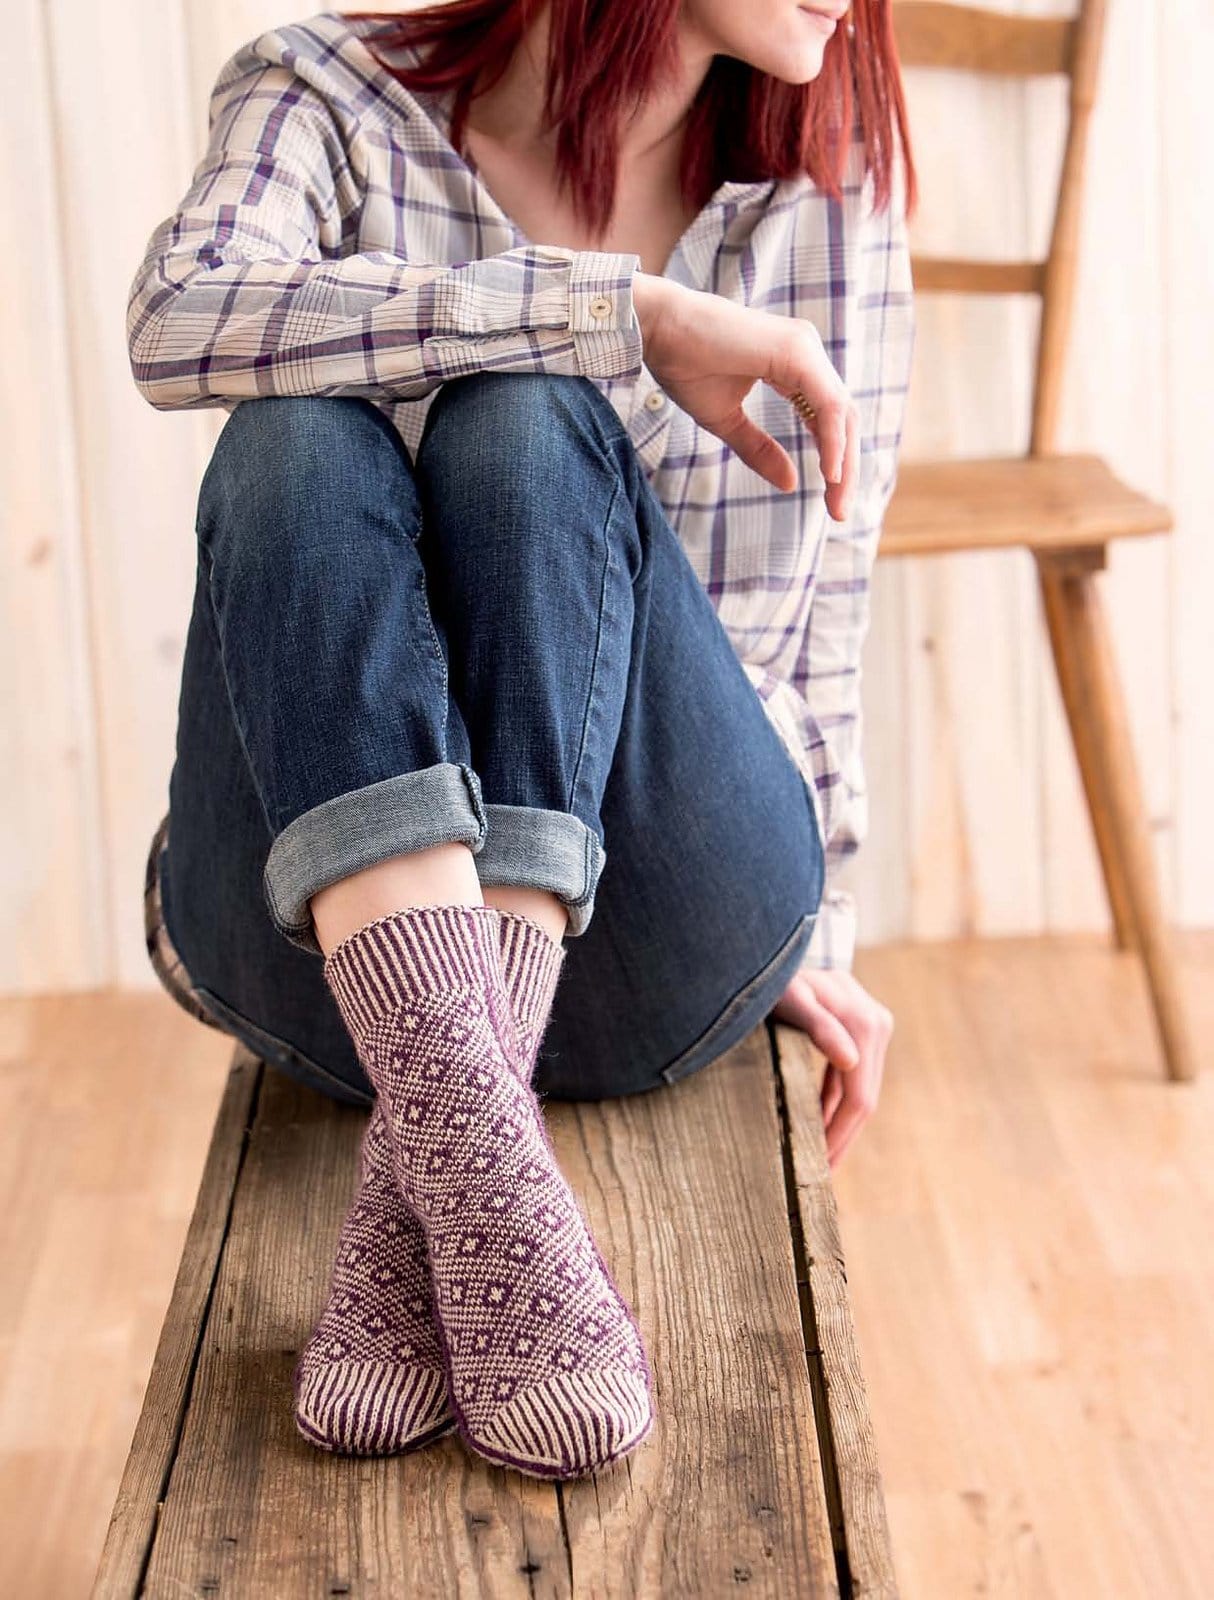 Custom Socks: Knit to Fit Your Feet